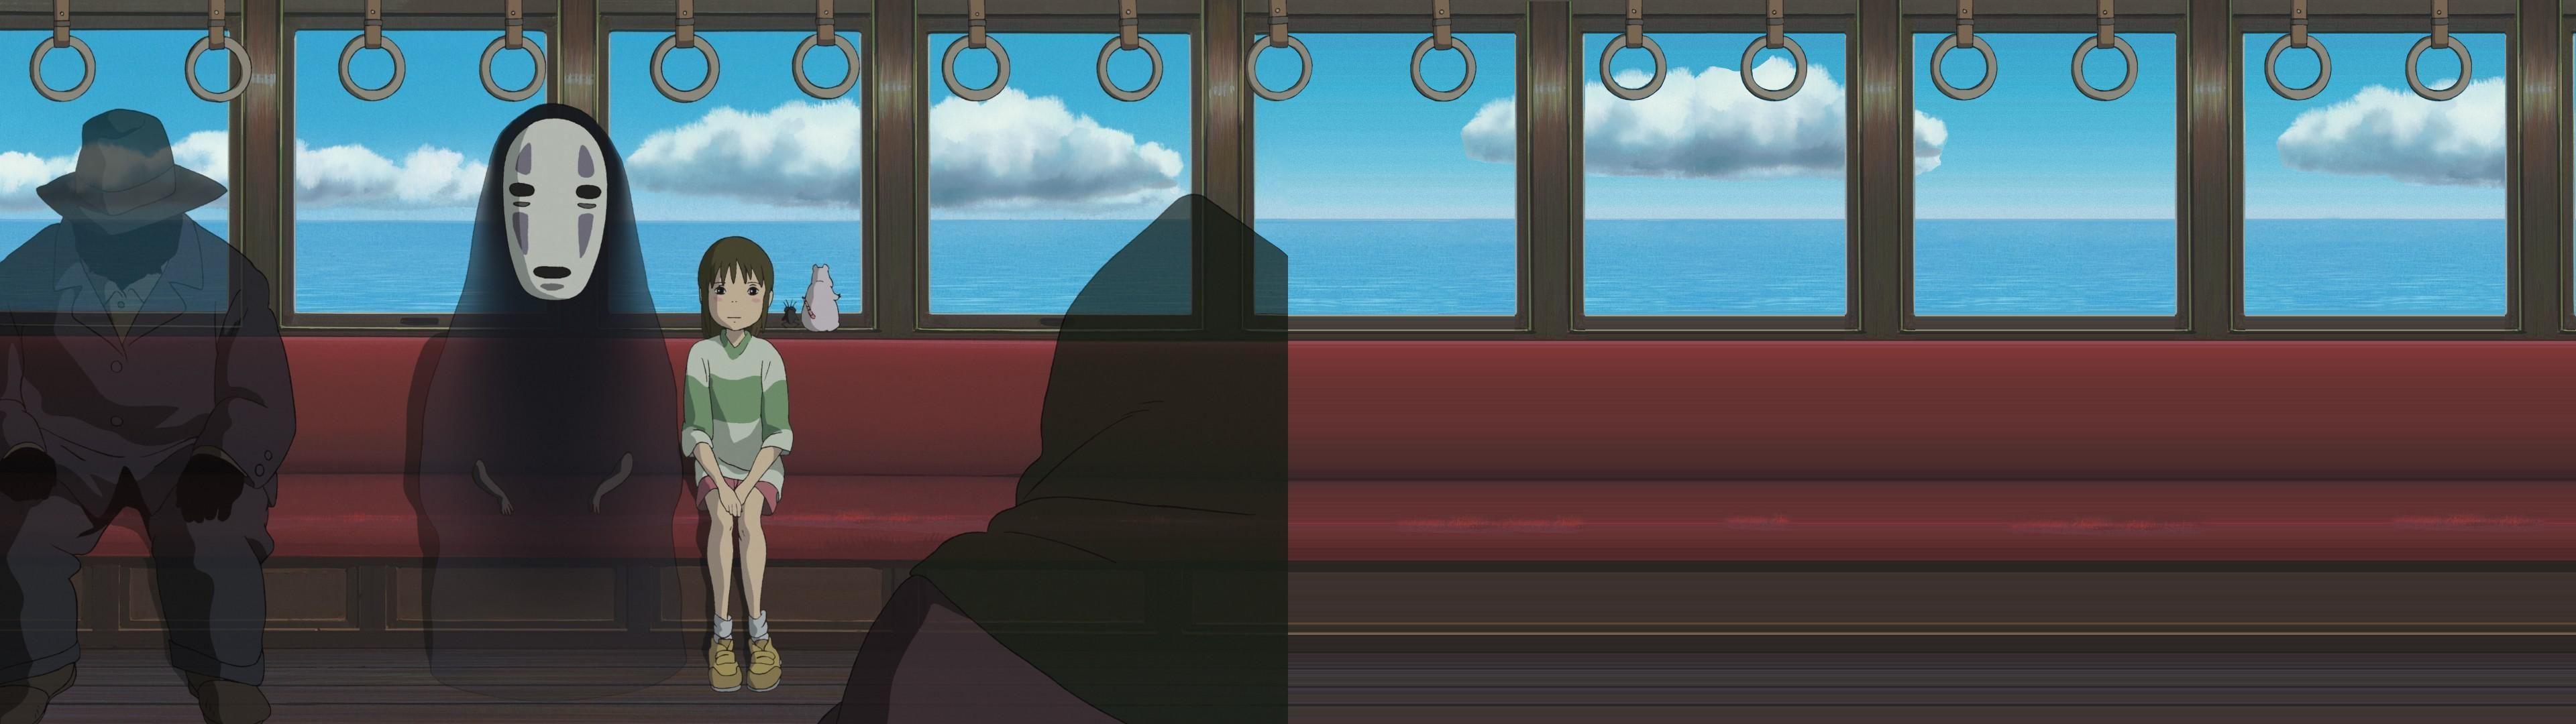 3840 x 1080 · jpeg - No Face Spirited Away Train - 3840x1080 Wallpaper - teahub.io